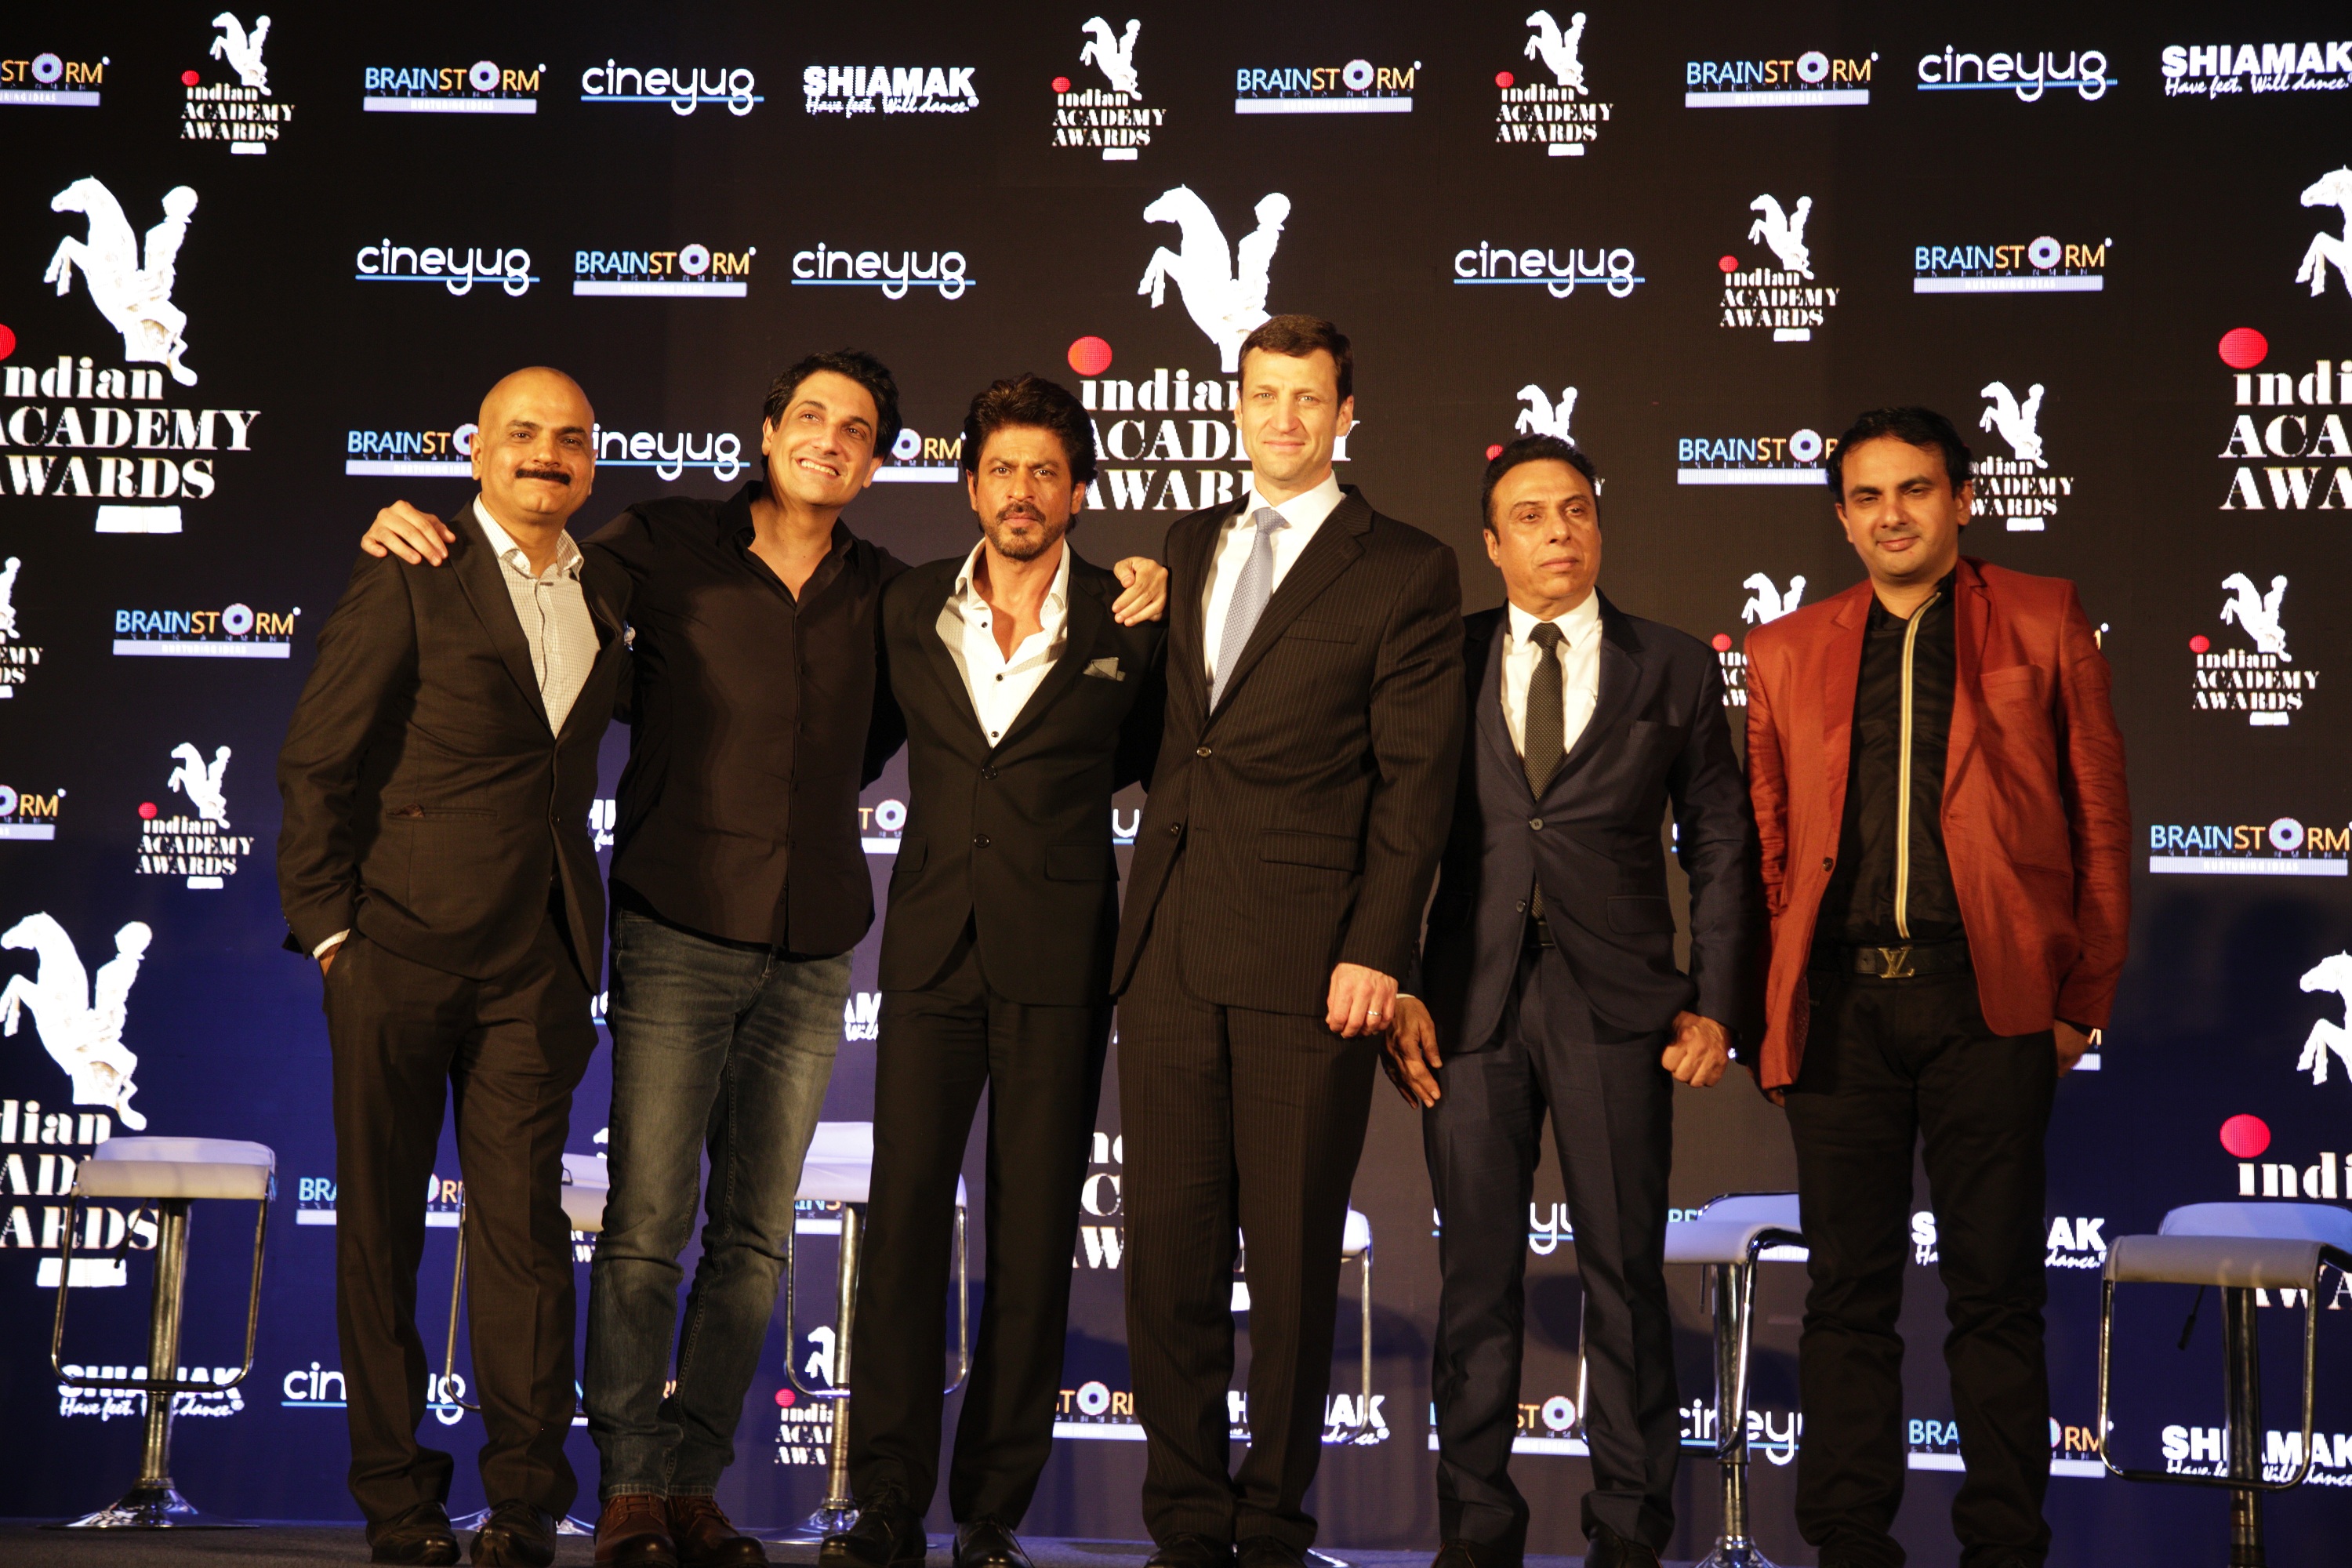 Shah Rukh Khan, announces, Indian Academy Awards